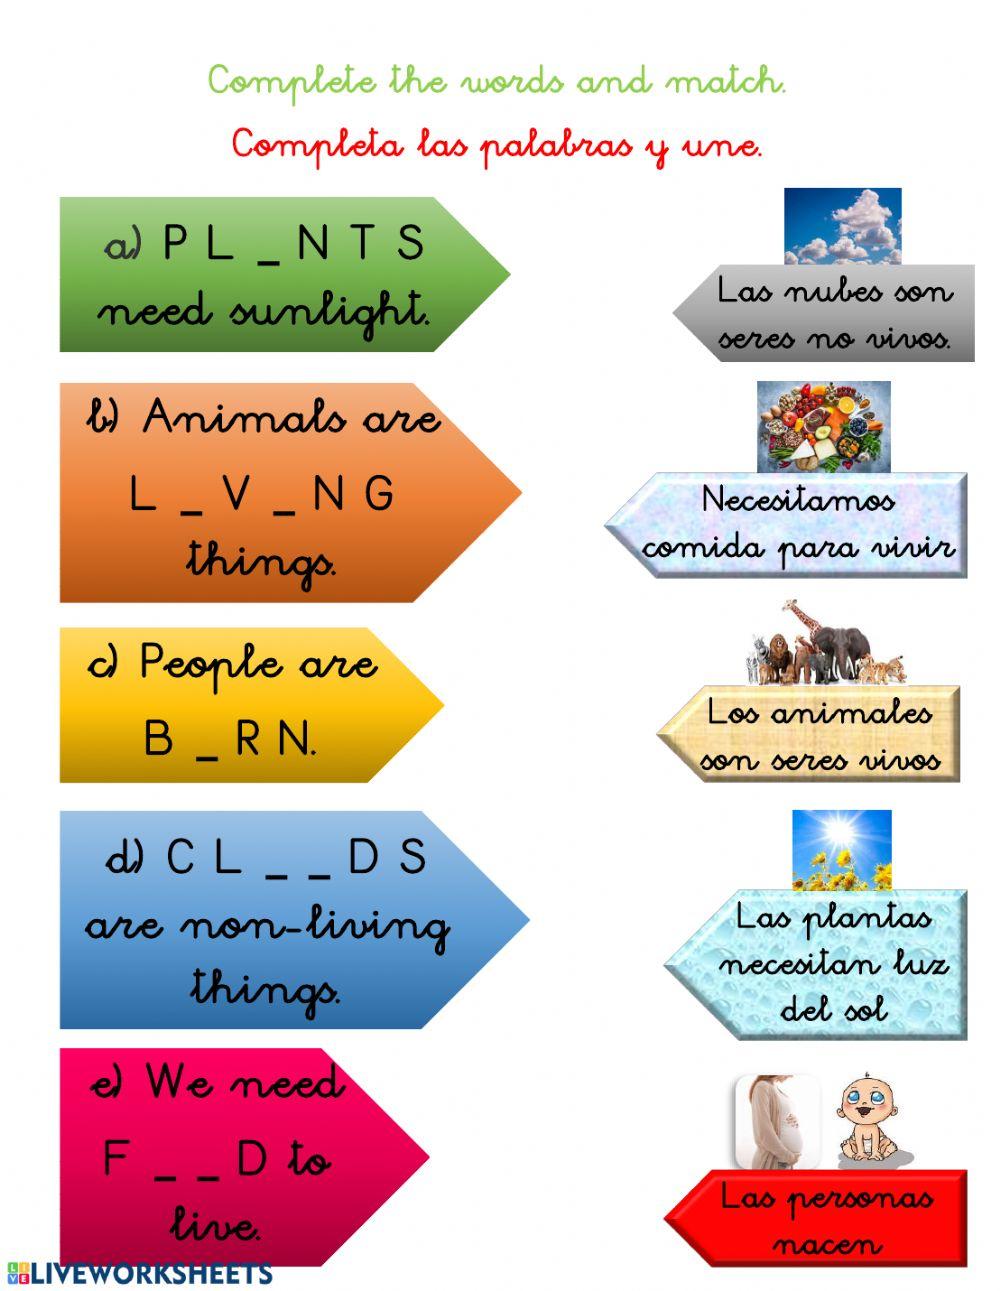 Vocabulary revision - unit 5: Life